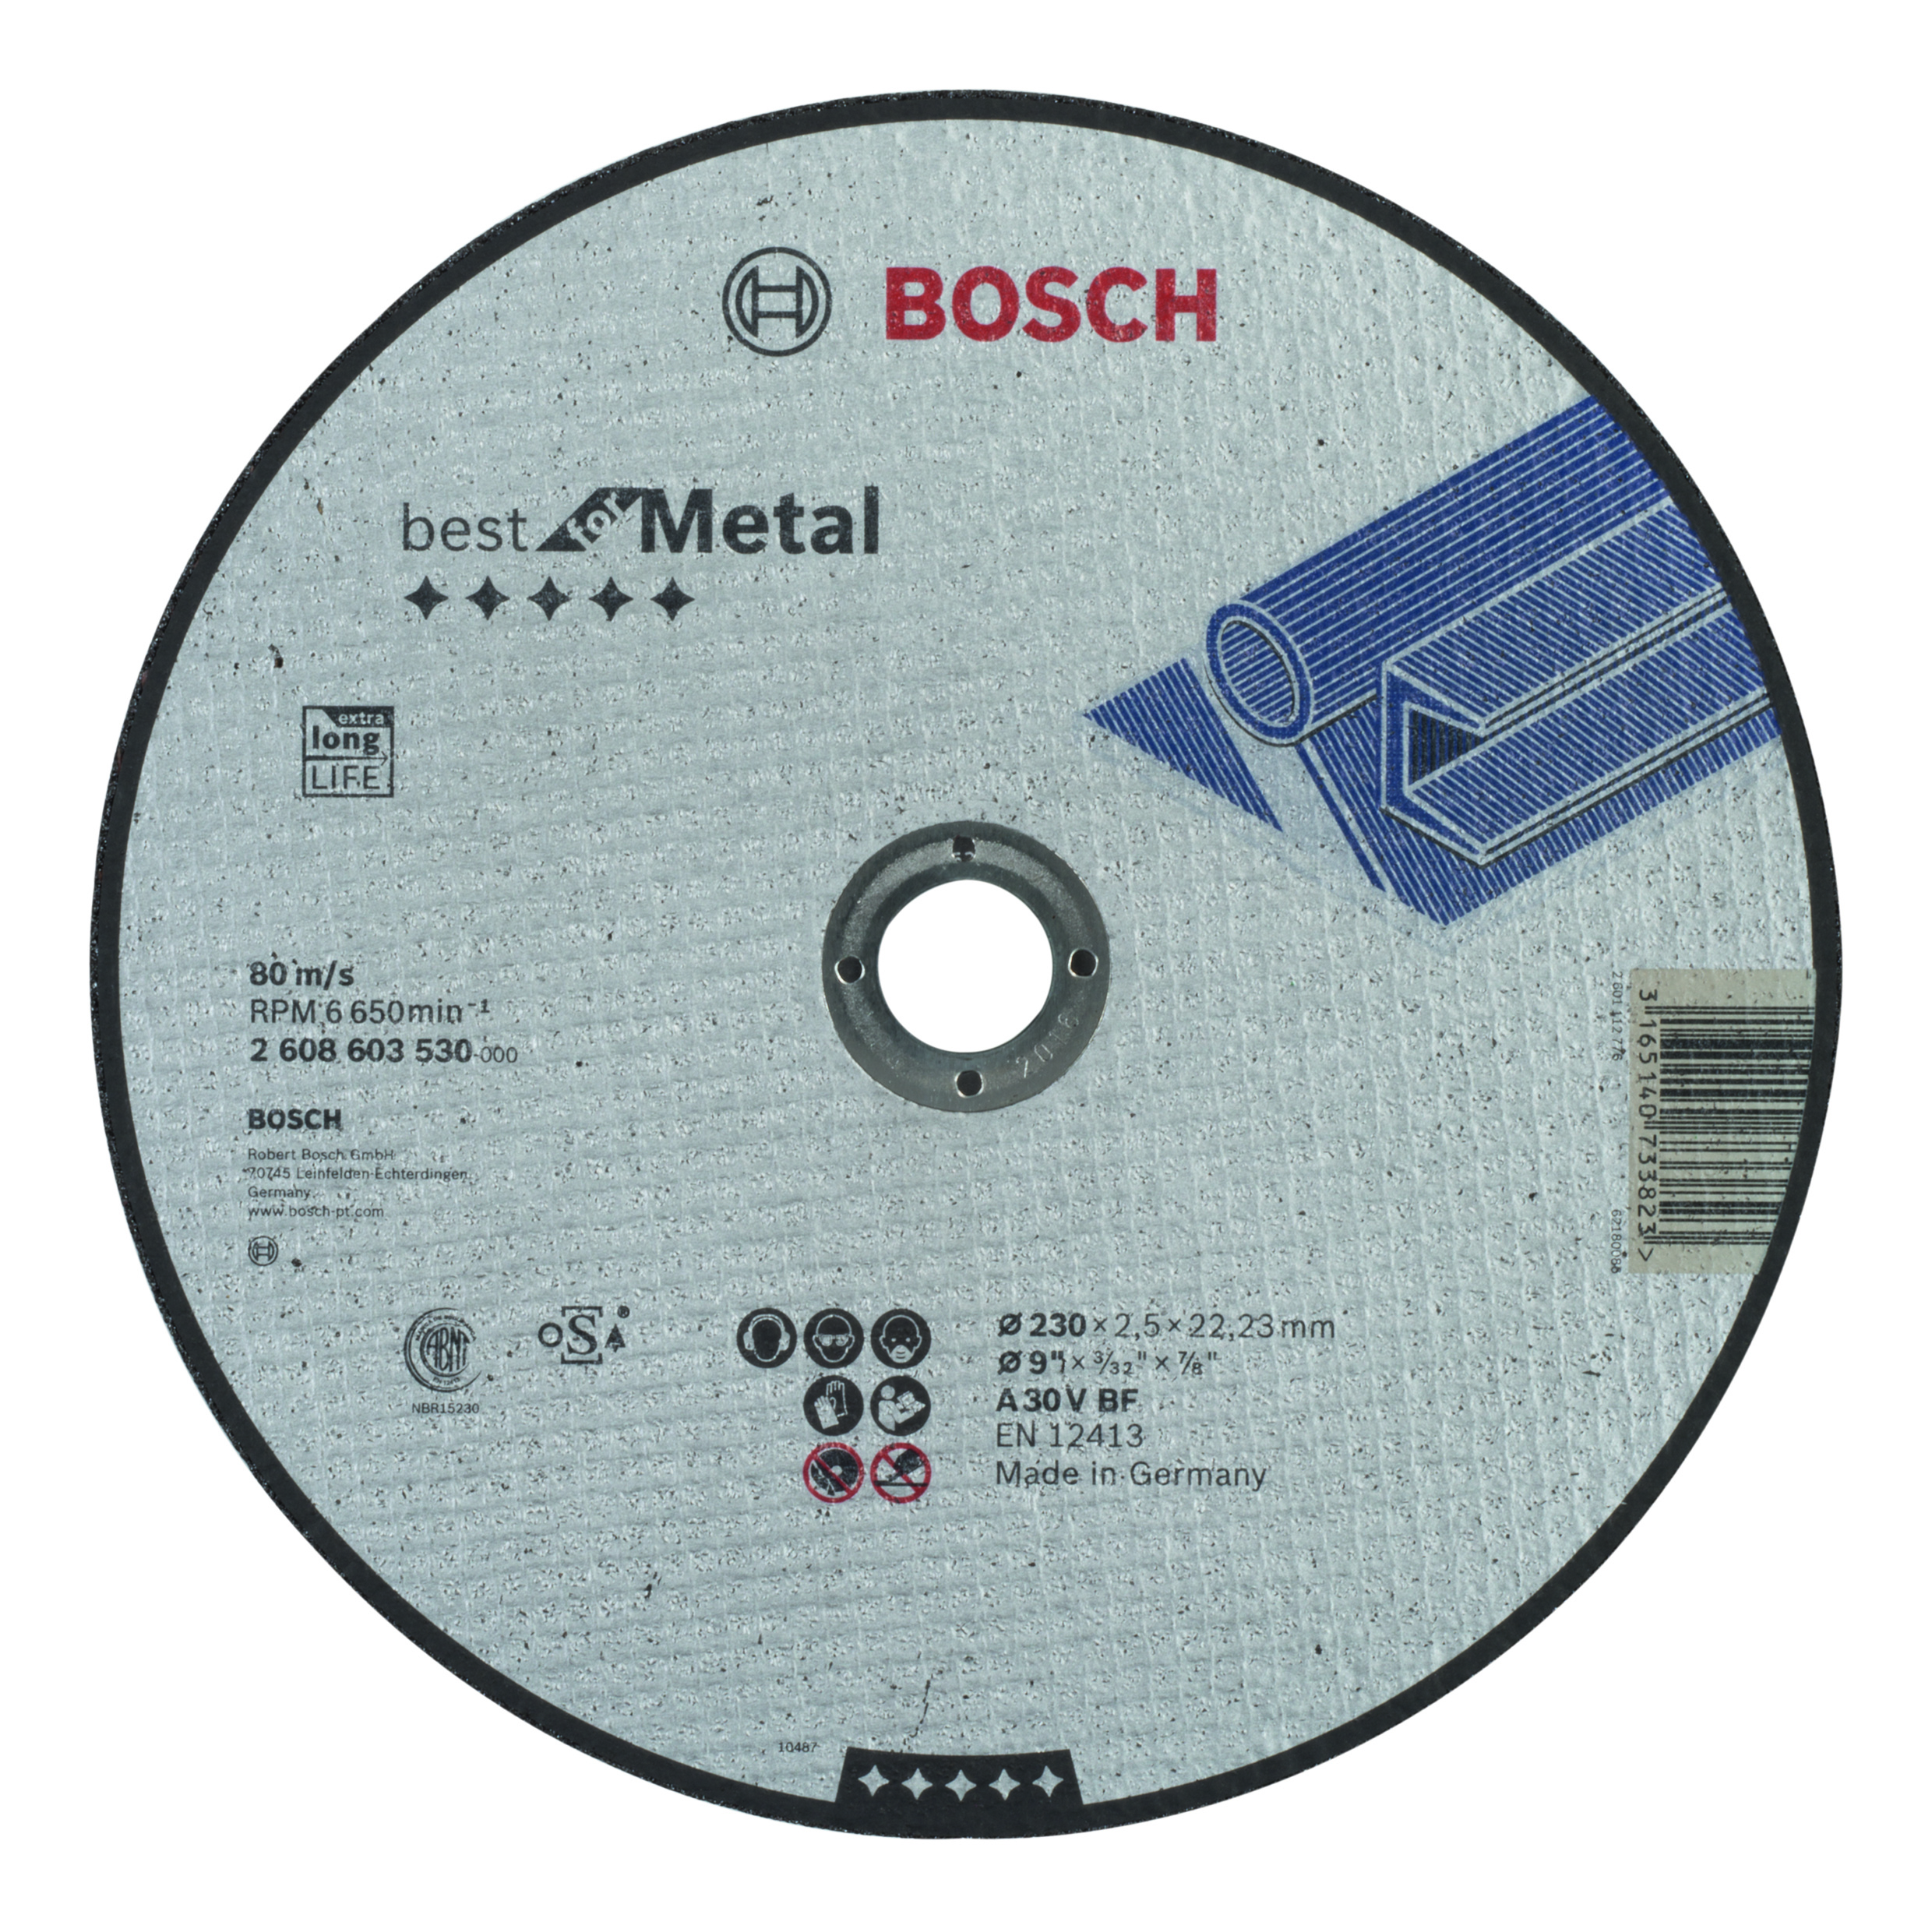 Bosch Trennscheibe gerade A for mm, mm V 230 30 2,5 Best BF, Metal